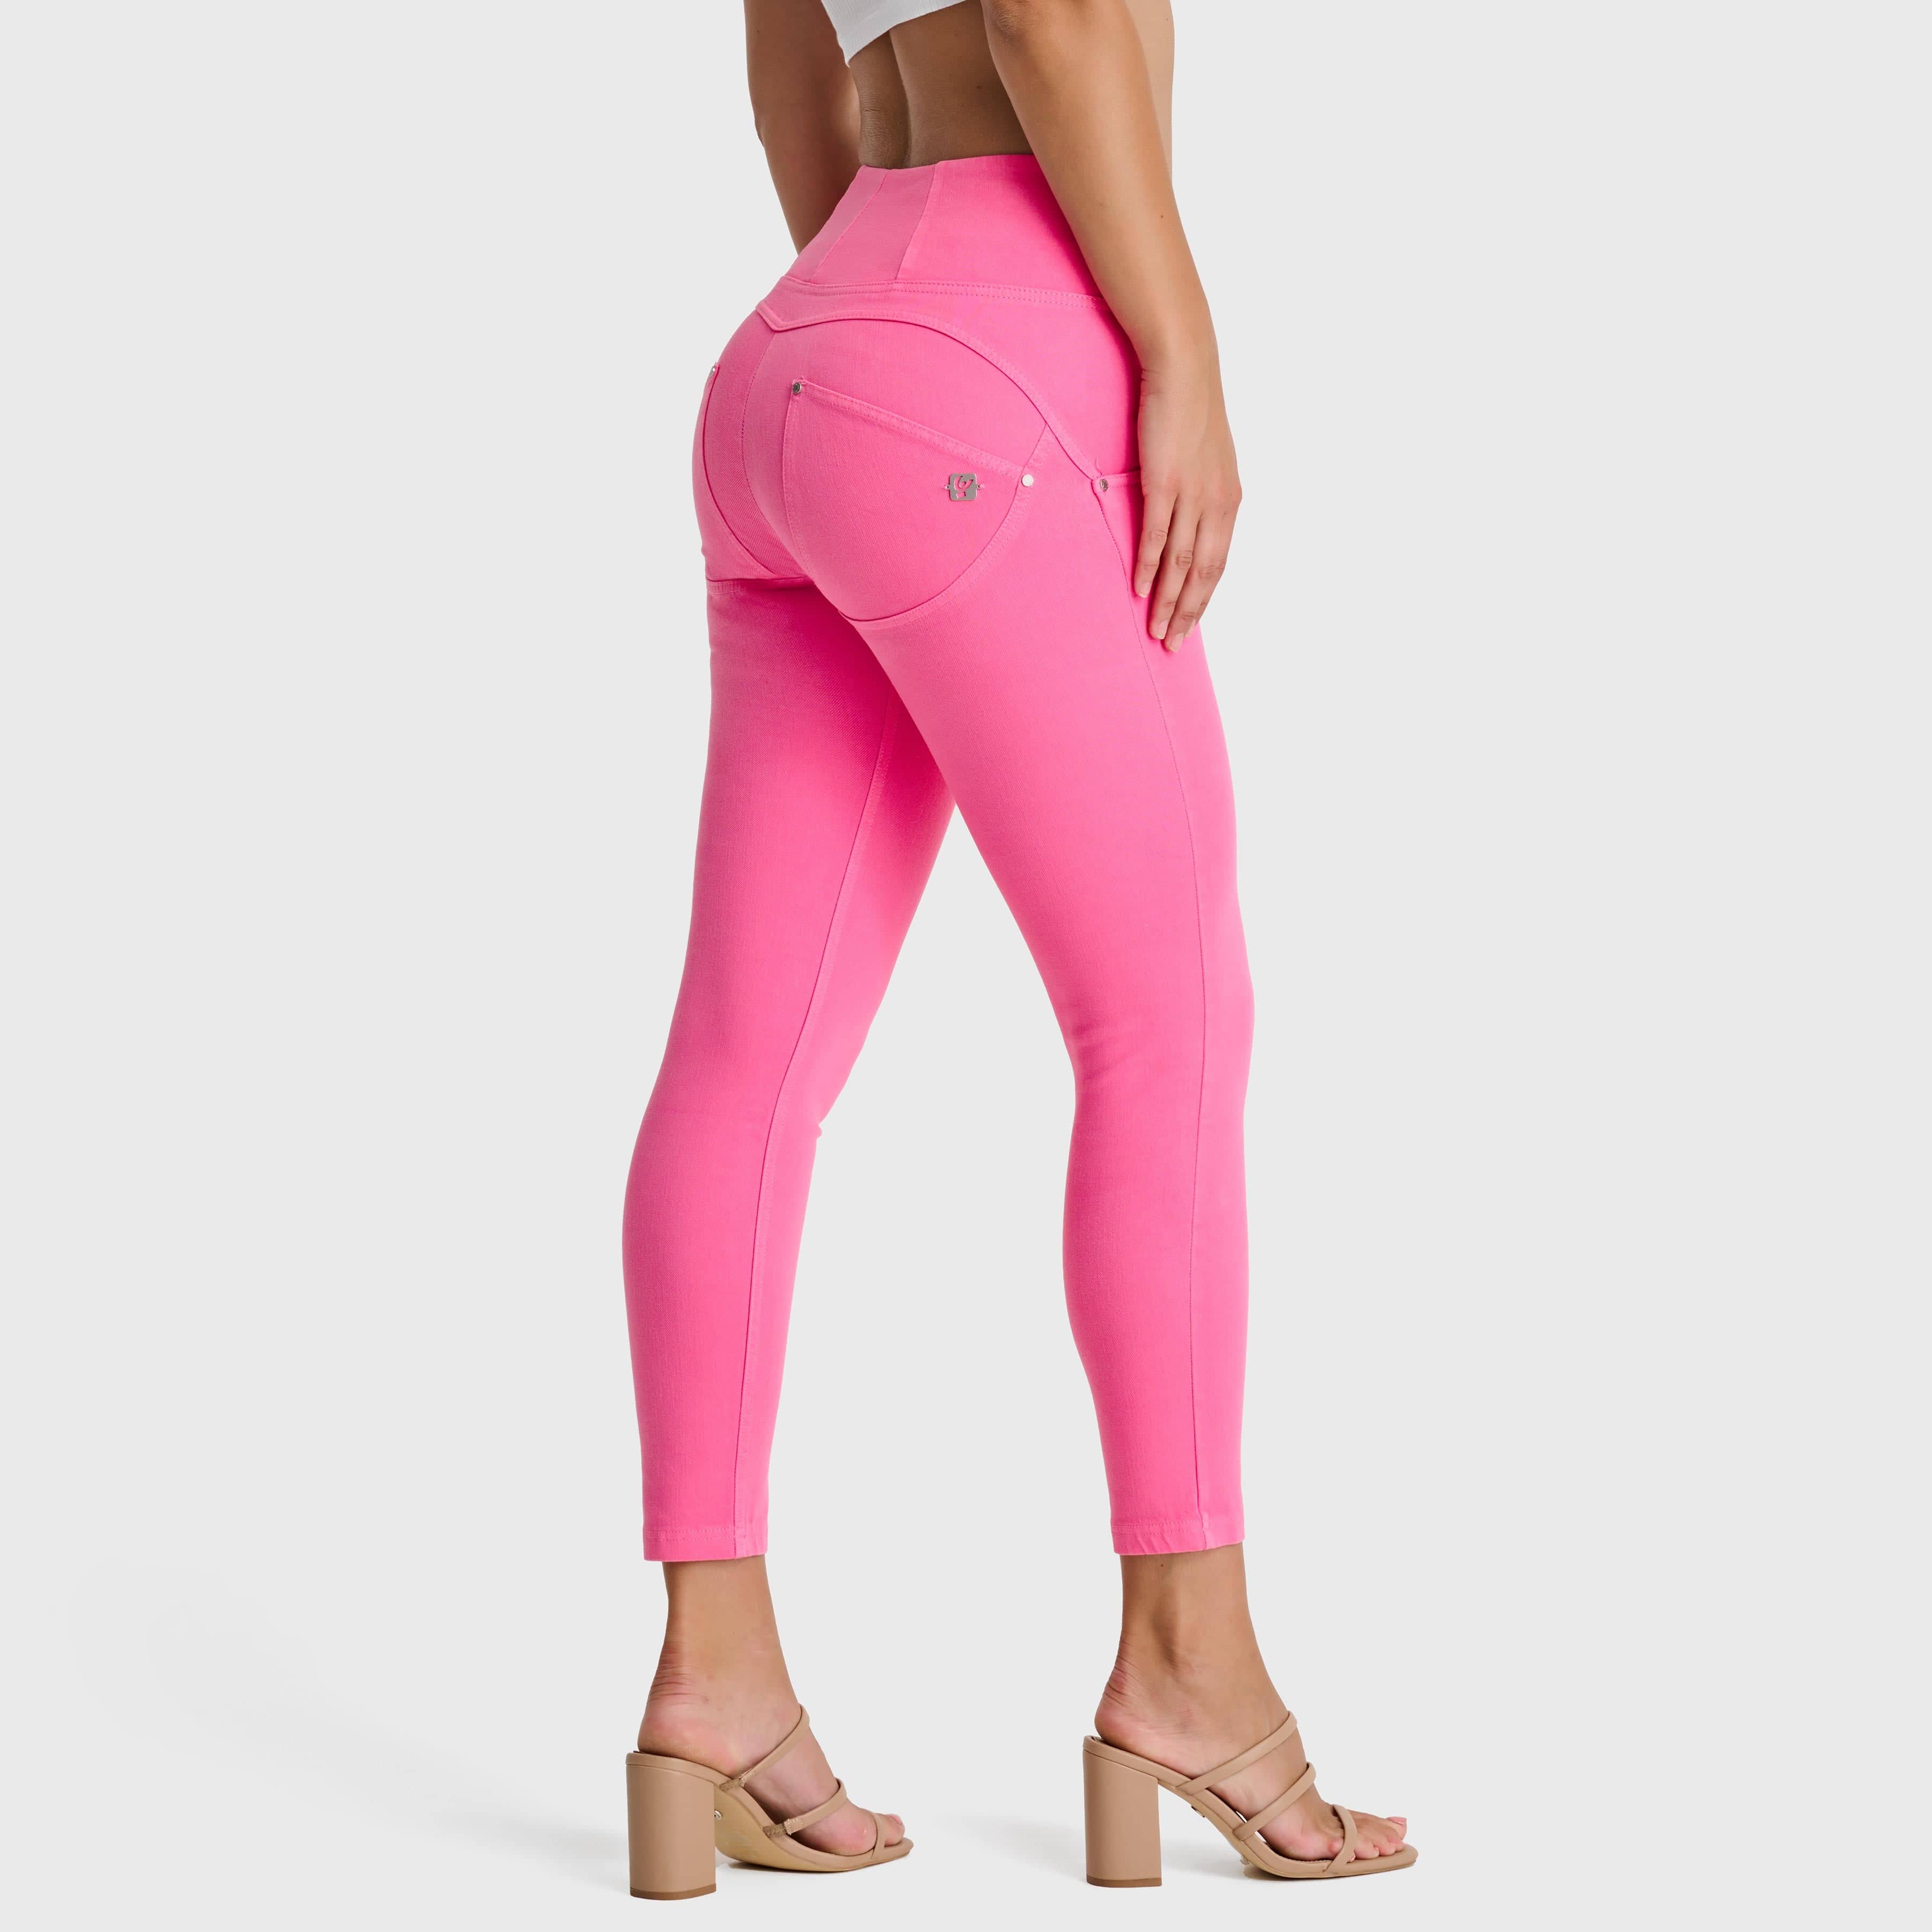 WR.UP® Snug Jeans - High Waisted - 7/8 Length - Candy Pink 2